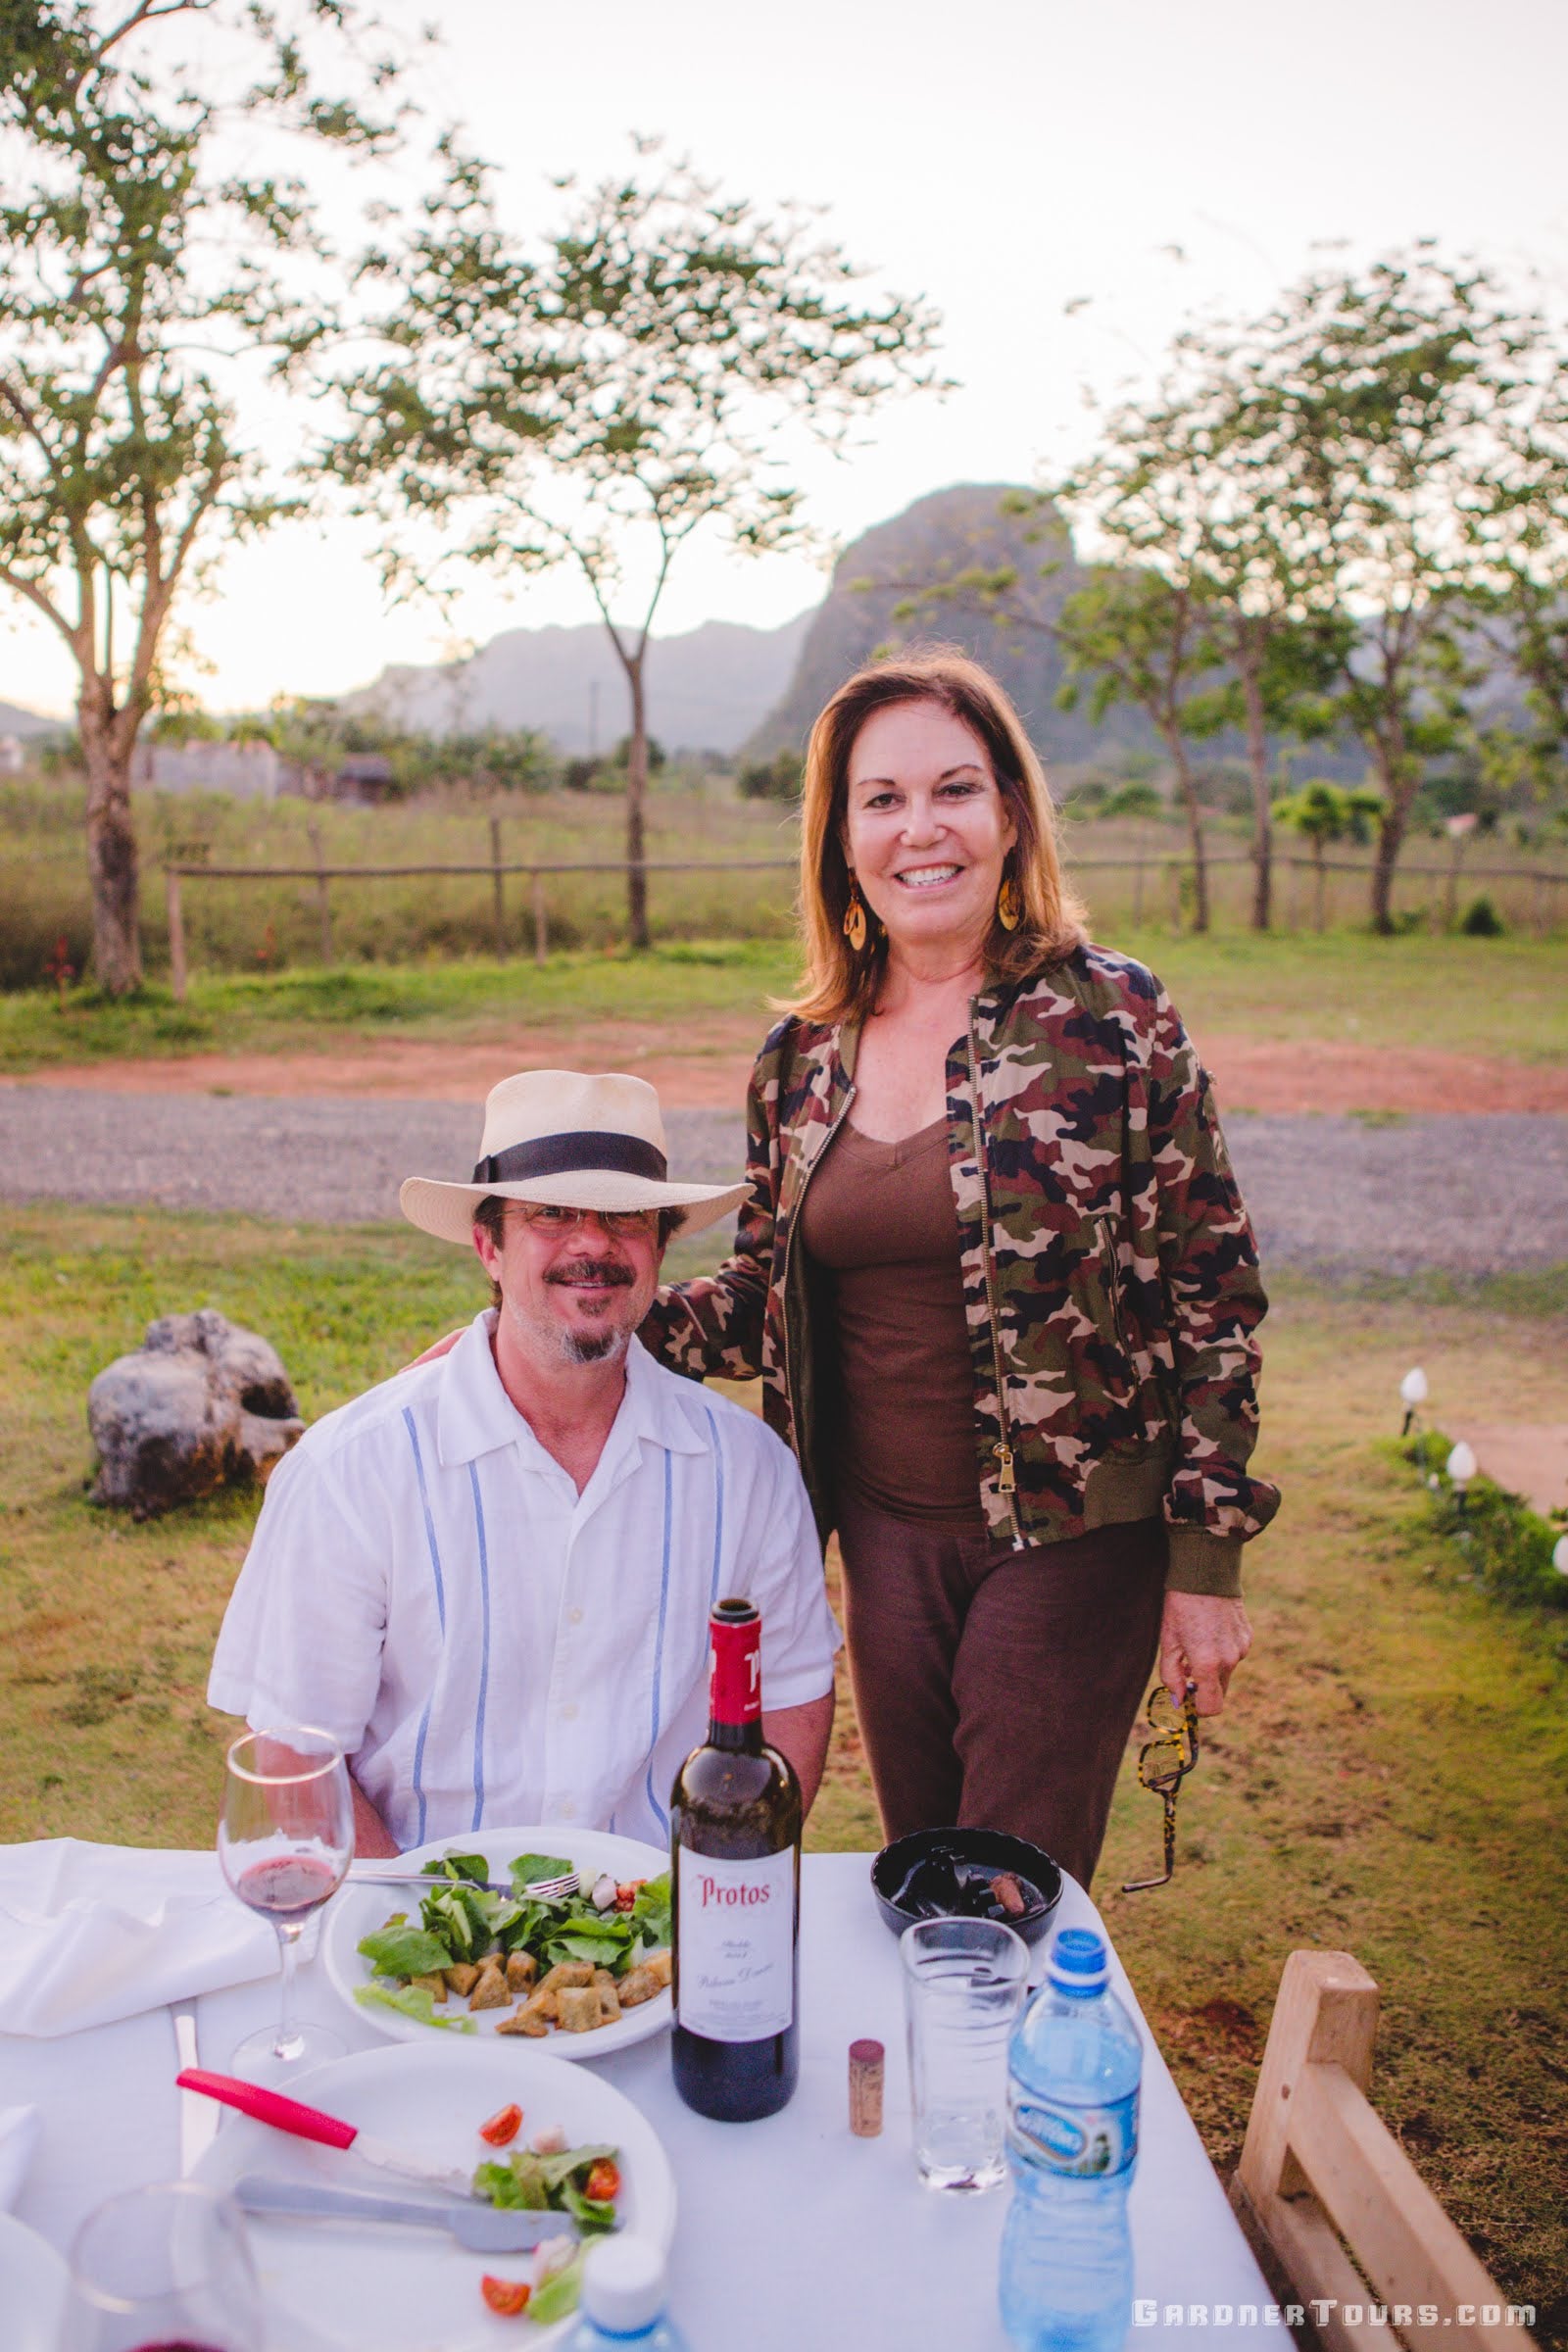 Man and a Woman enjoying a nice meal with wine at 5-Star Restaurant Paladar El Cuajaní in Viñales, Cuba